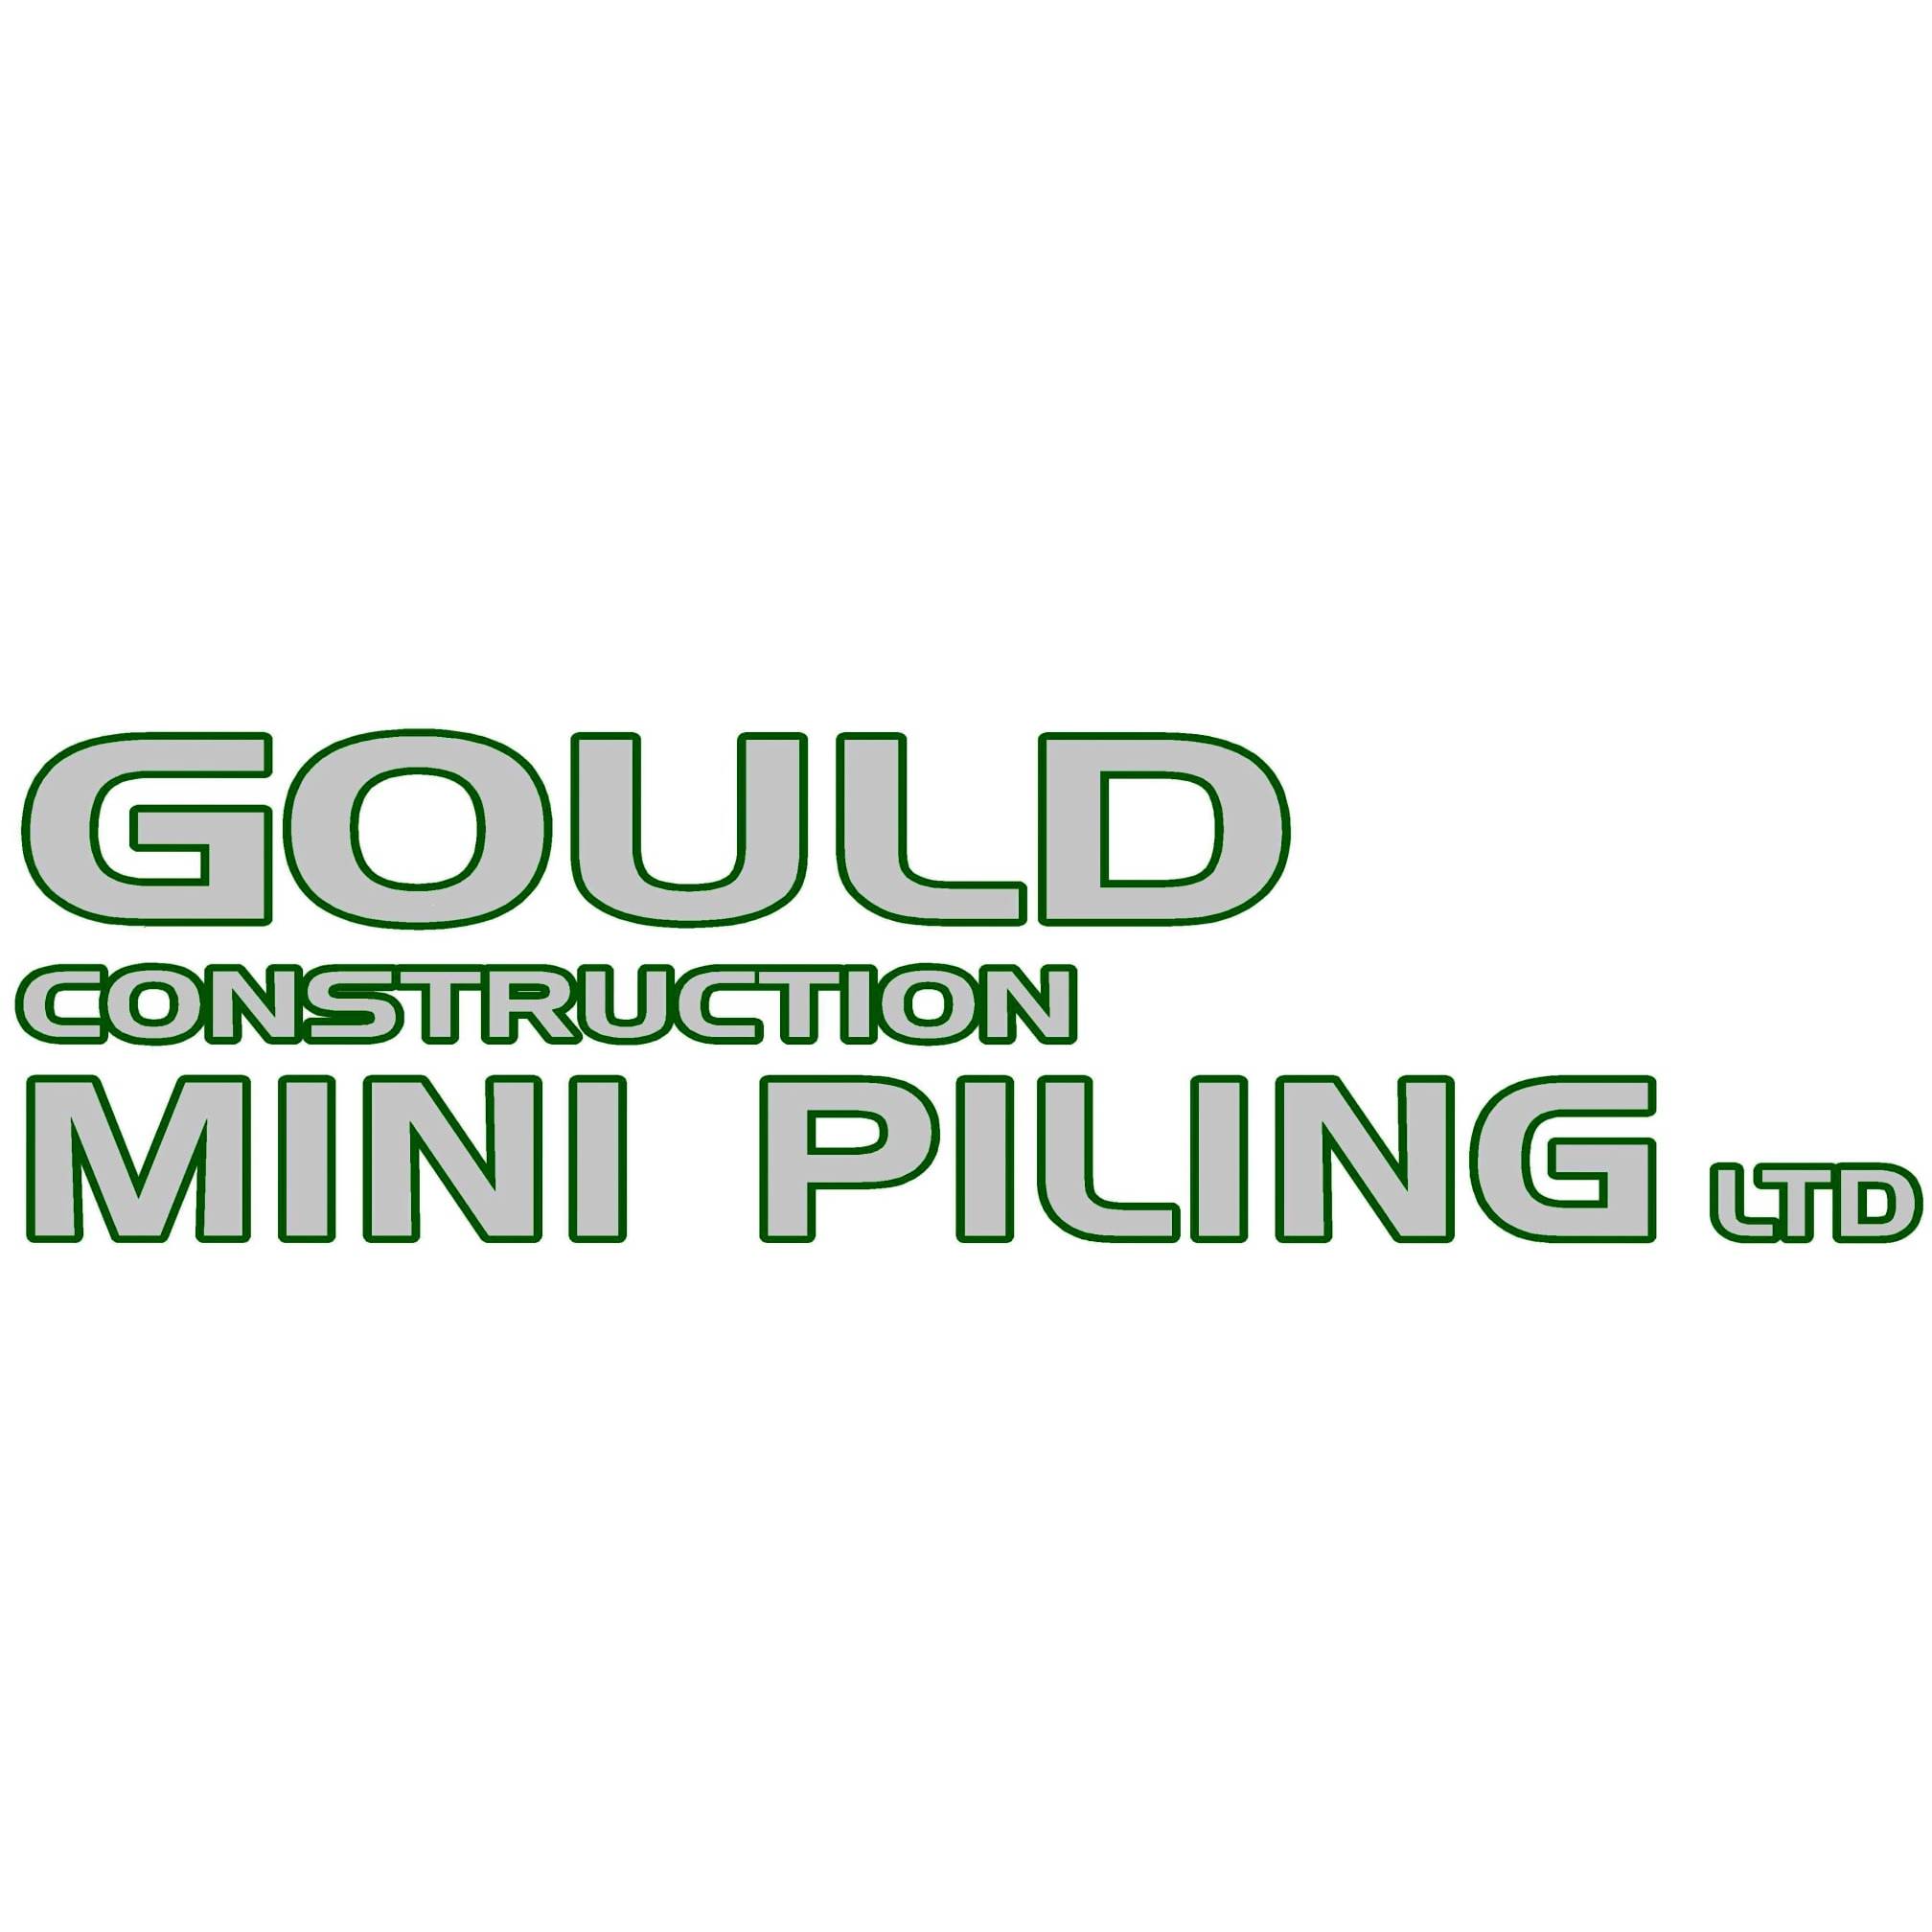 Gould Construction Mini Piling Ltd logo